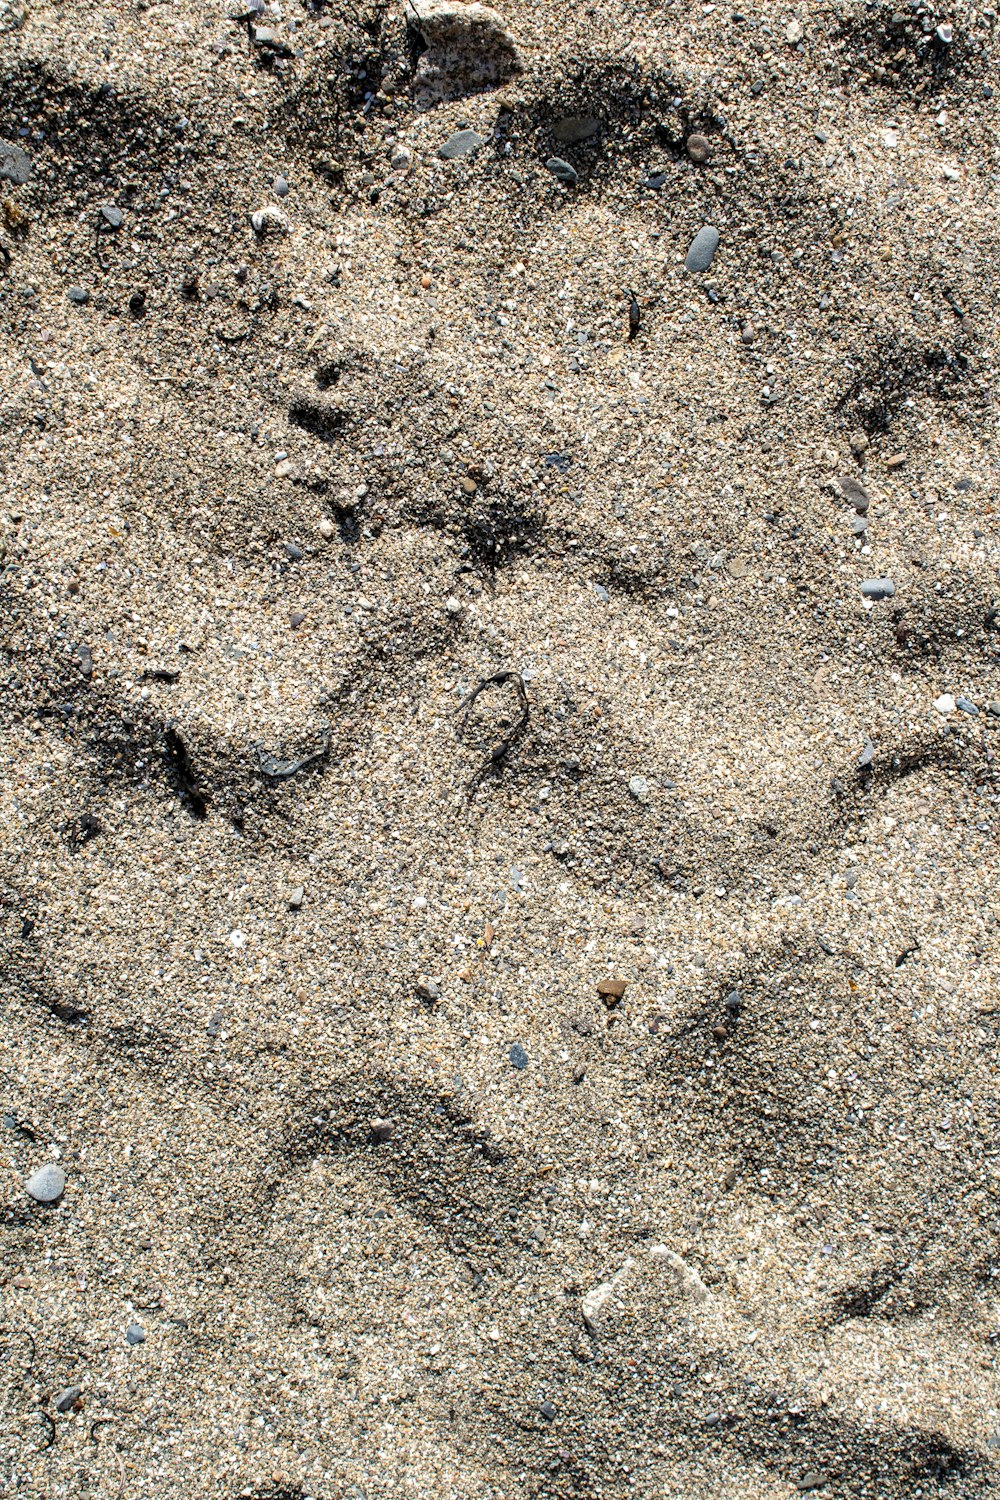 a close-up of a dirt surface